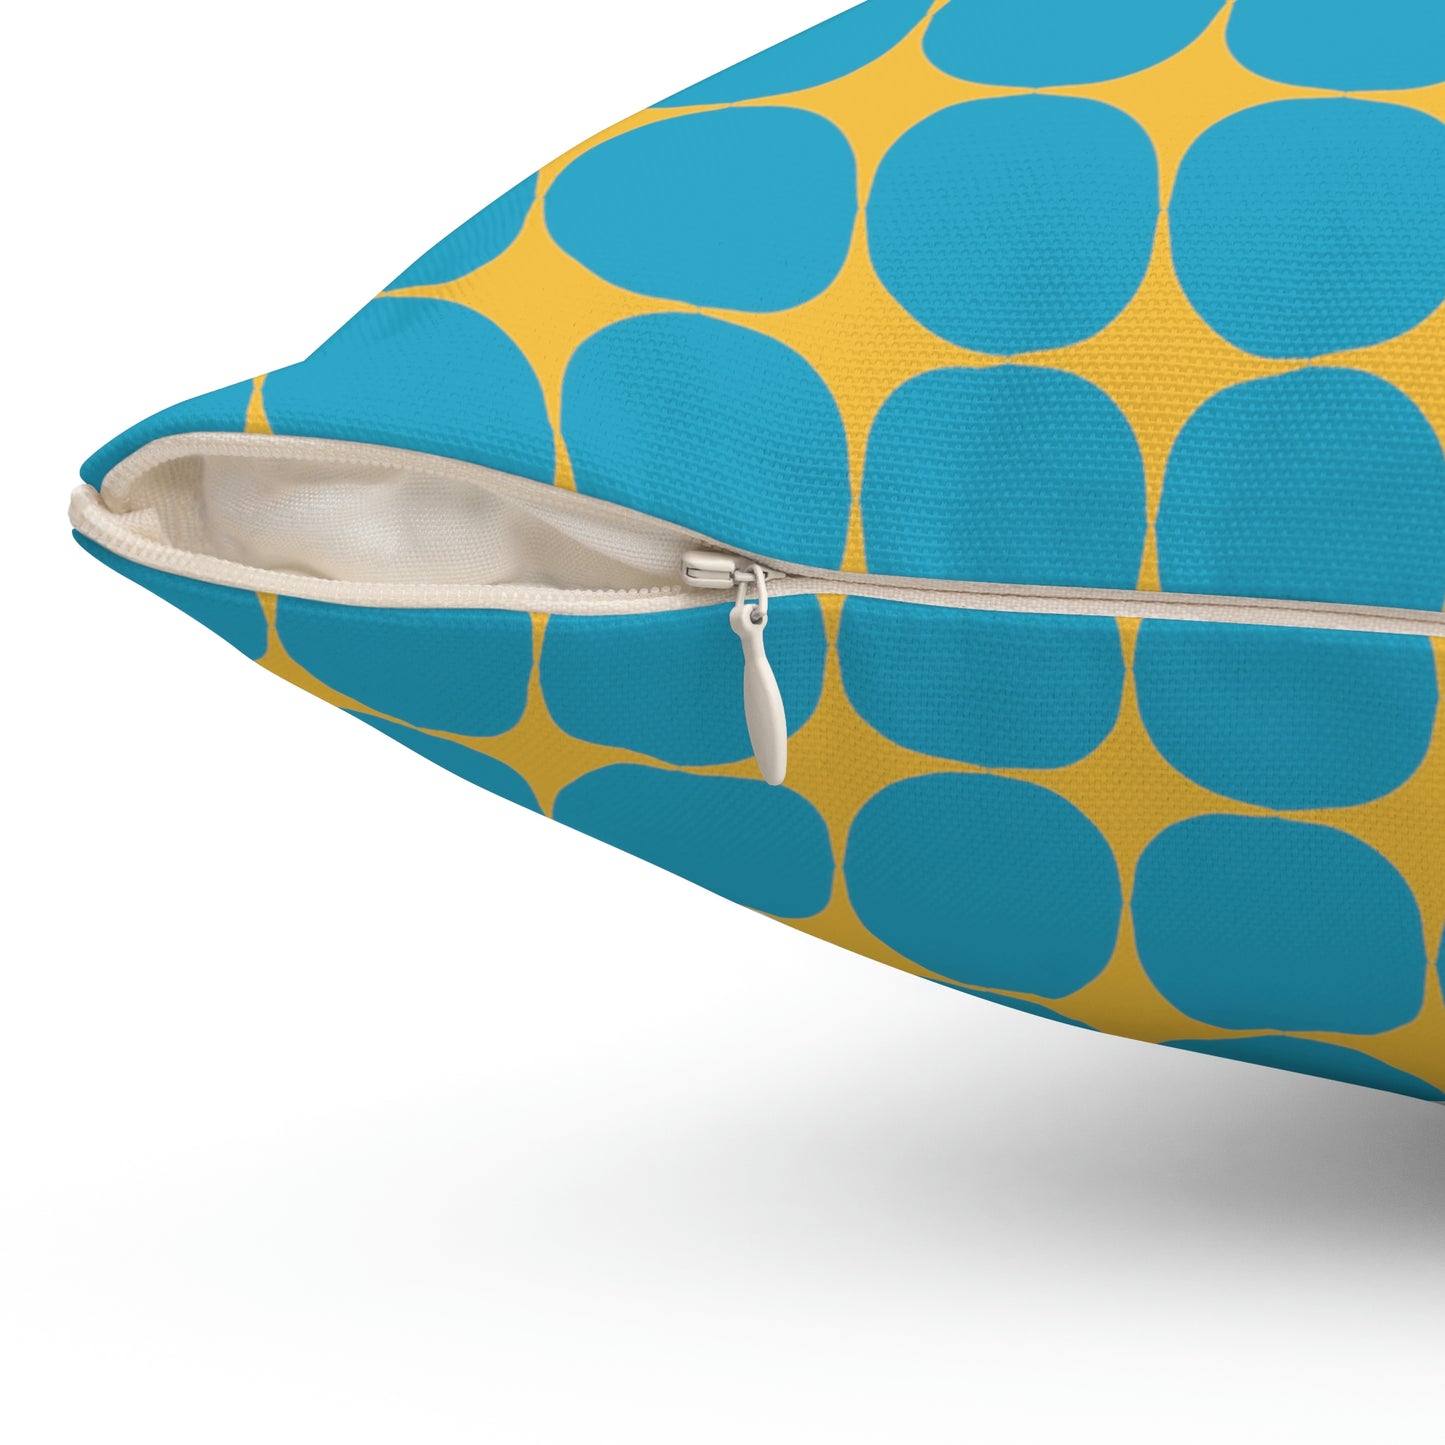 Spun Polyester Square Pillow Case “Rhombus Star on Turquoise”